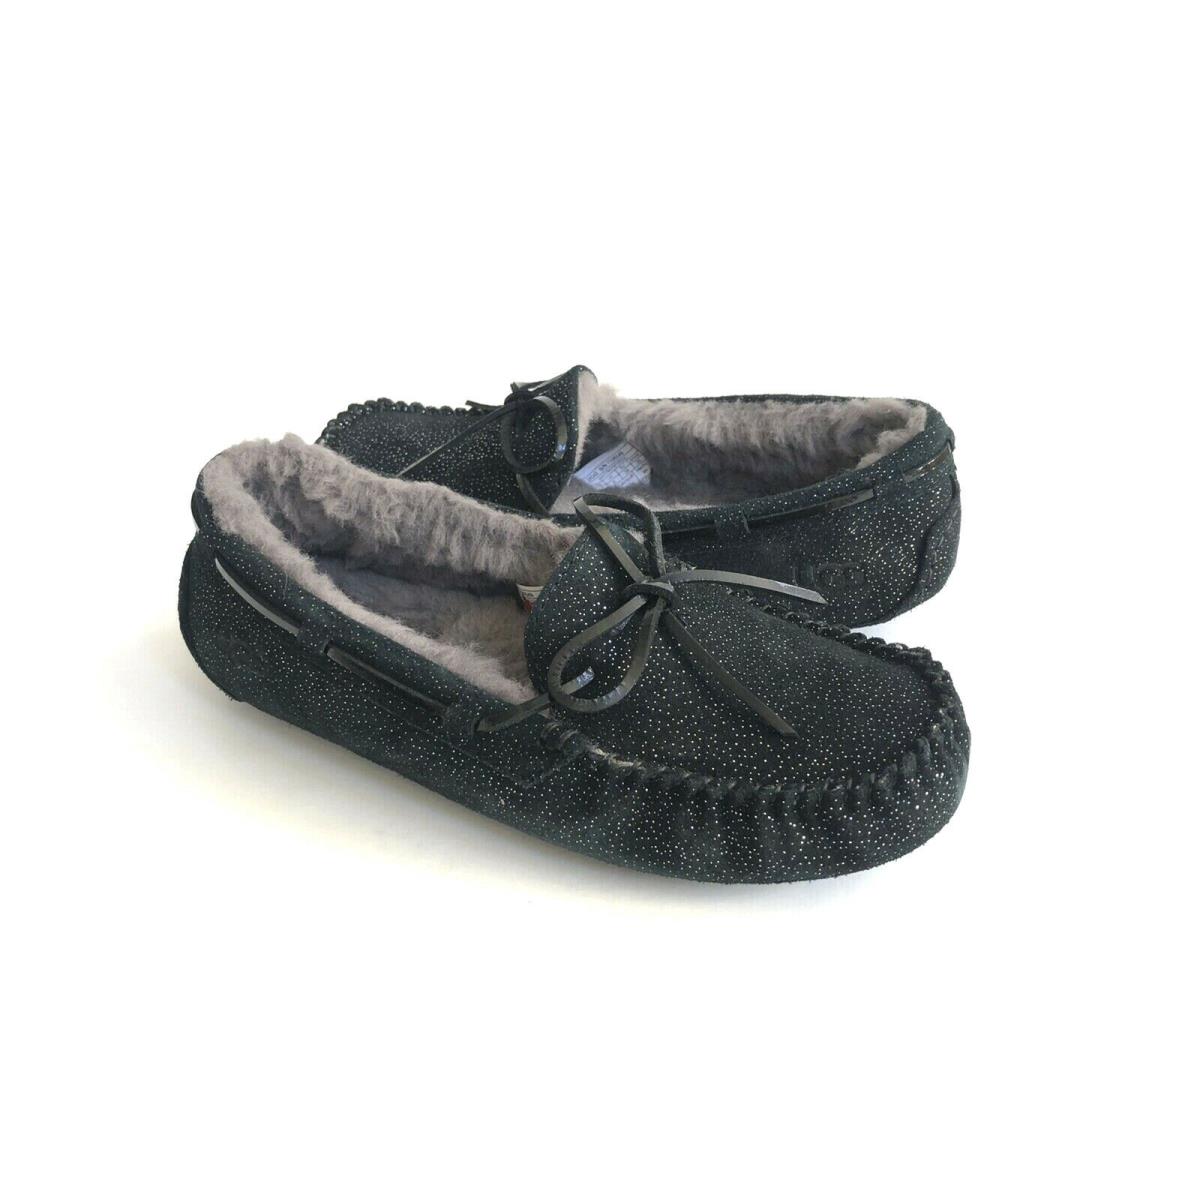 Ugg Dakota Twinkle Sparkle Black Shearling Slippers US 6 / EU 37 / UK 4